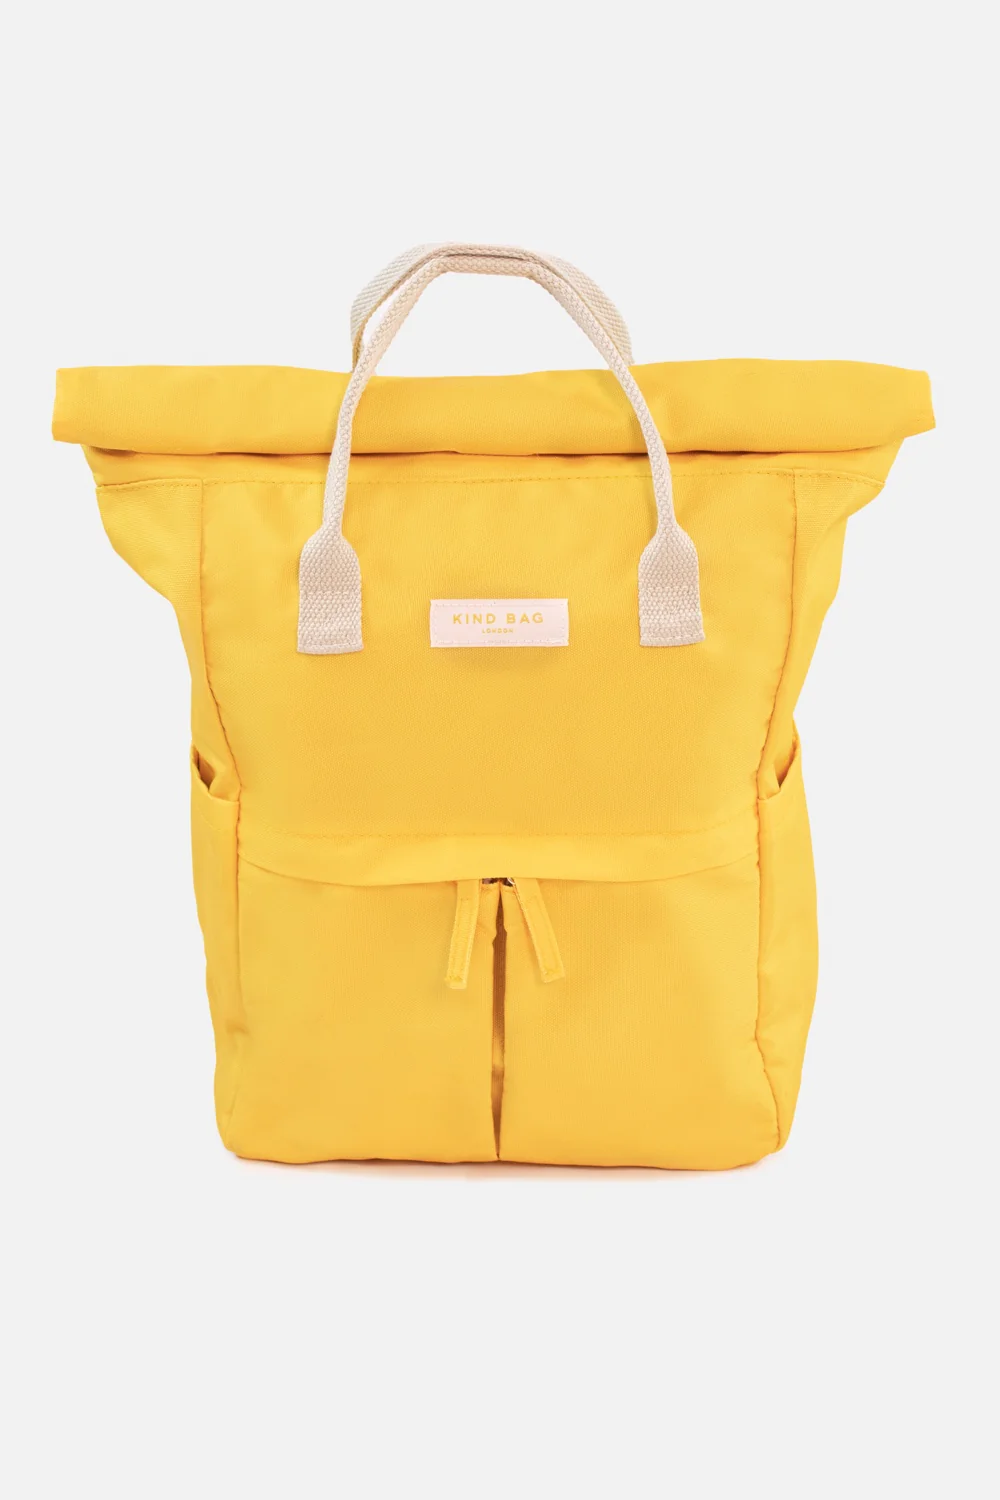 kind-bag-medium-hackney-sustainable-backpack-tuscan-sun-yellow